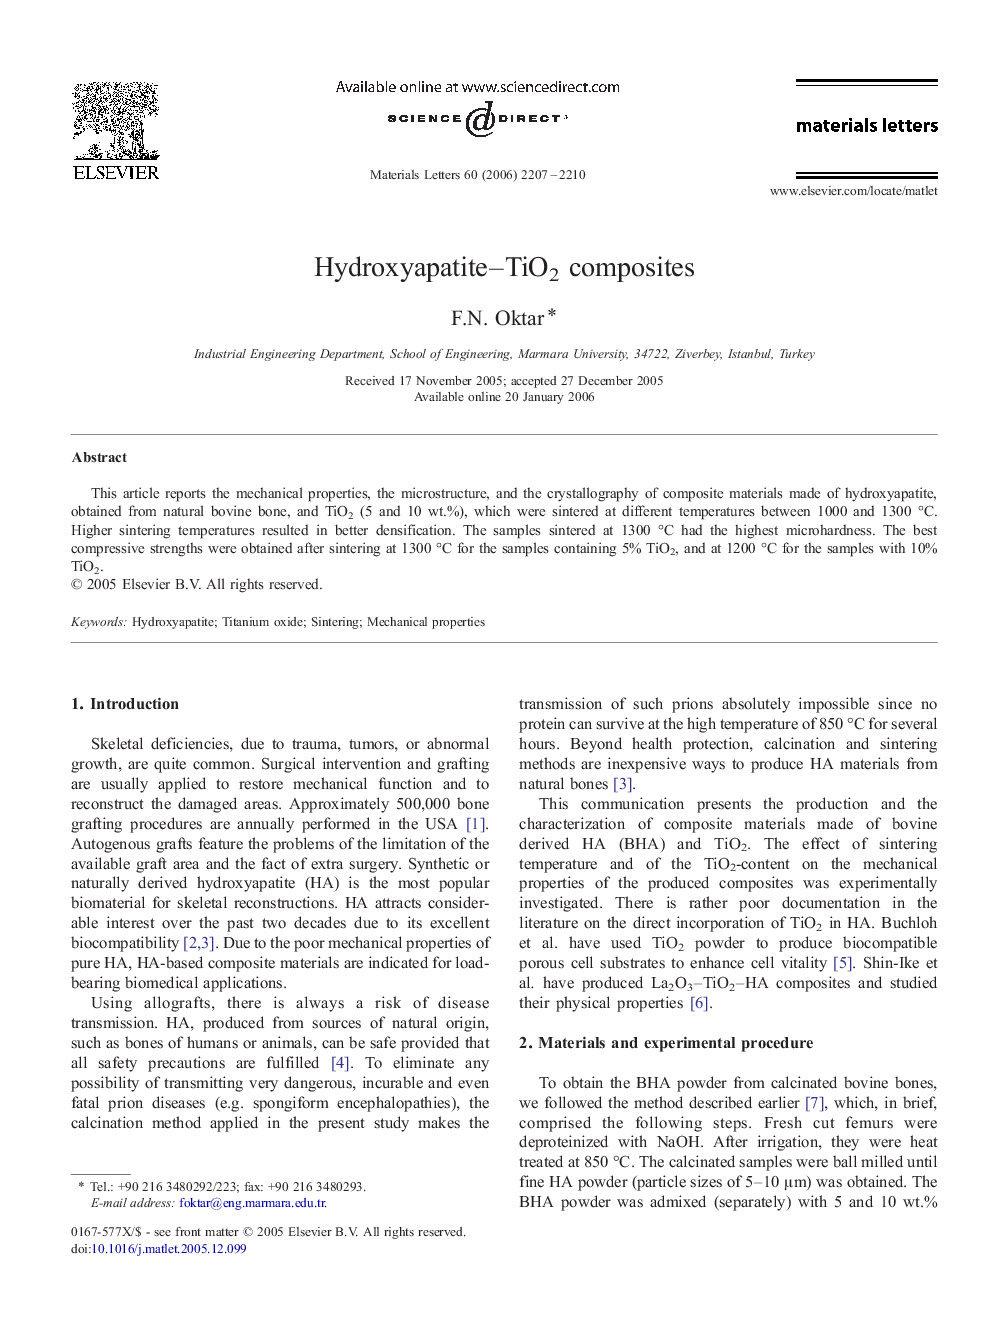 Hydroxyapatite–TiO2 composites